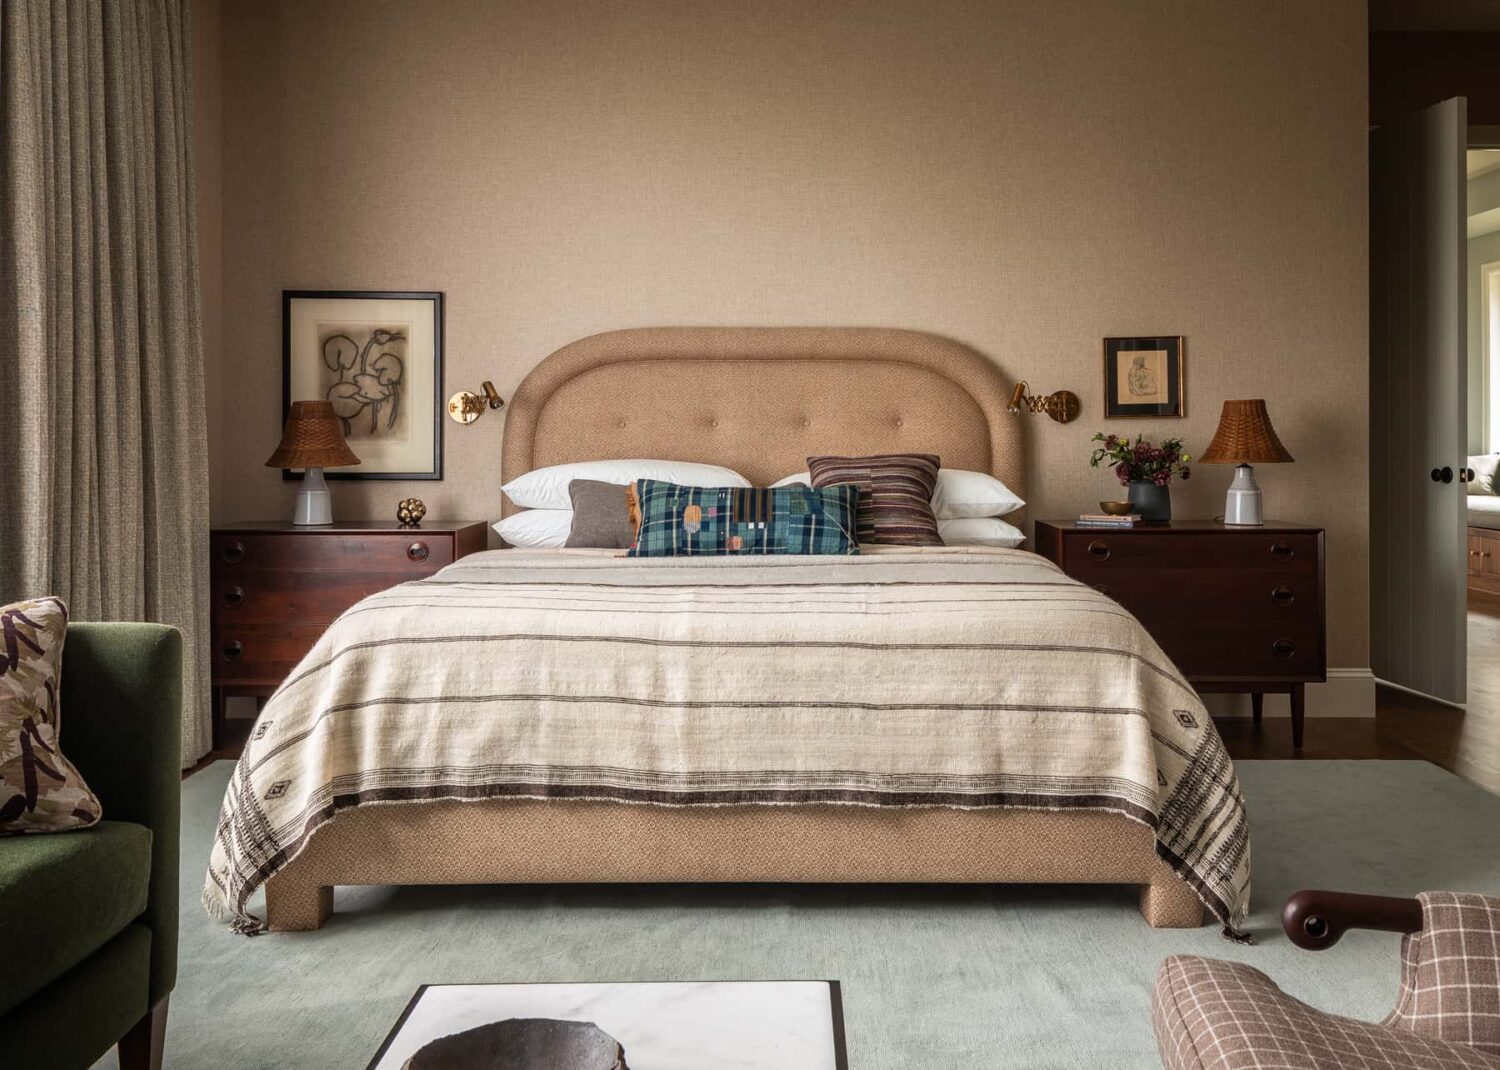 Heidi-Caillier-Design-interior-designer-home-decor-primary-bedroom-modern-traditional-wallpaper-bespoke-bed